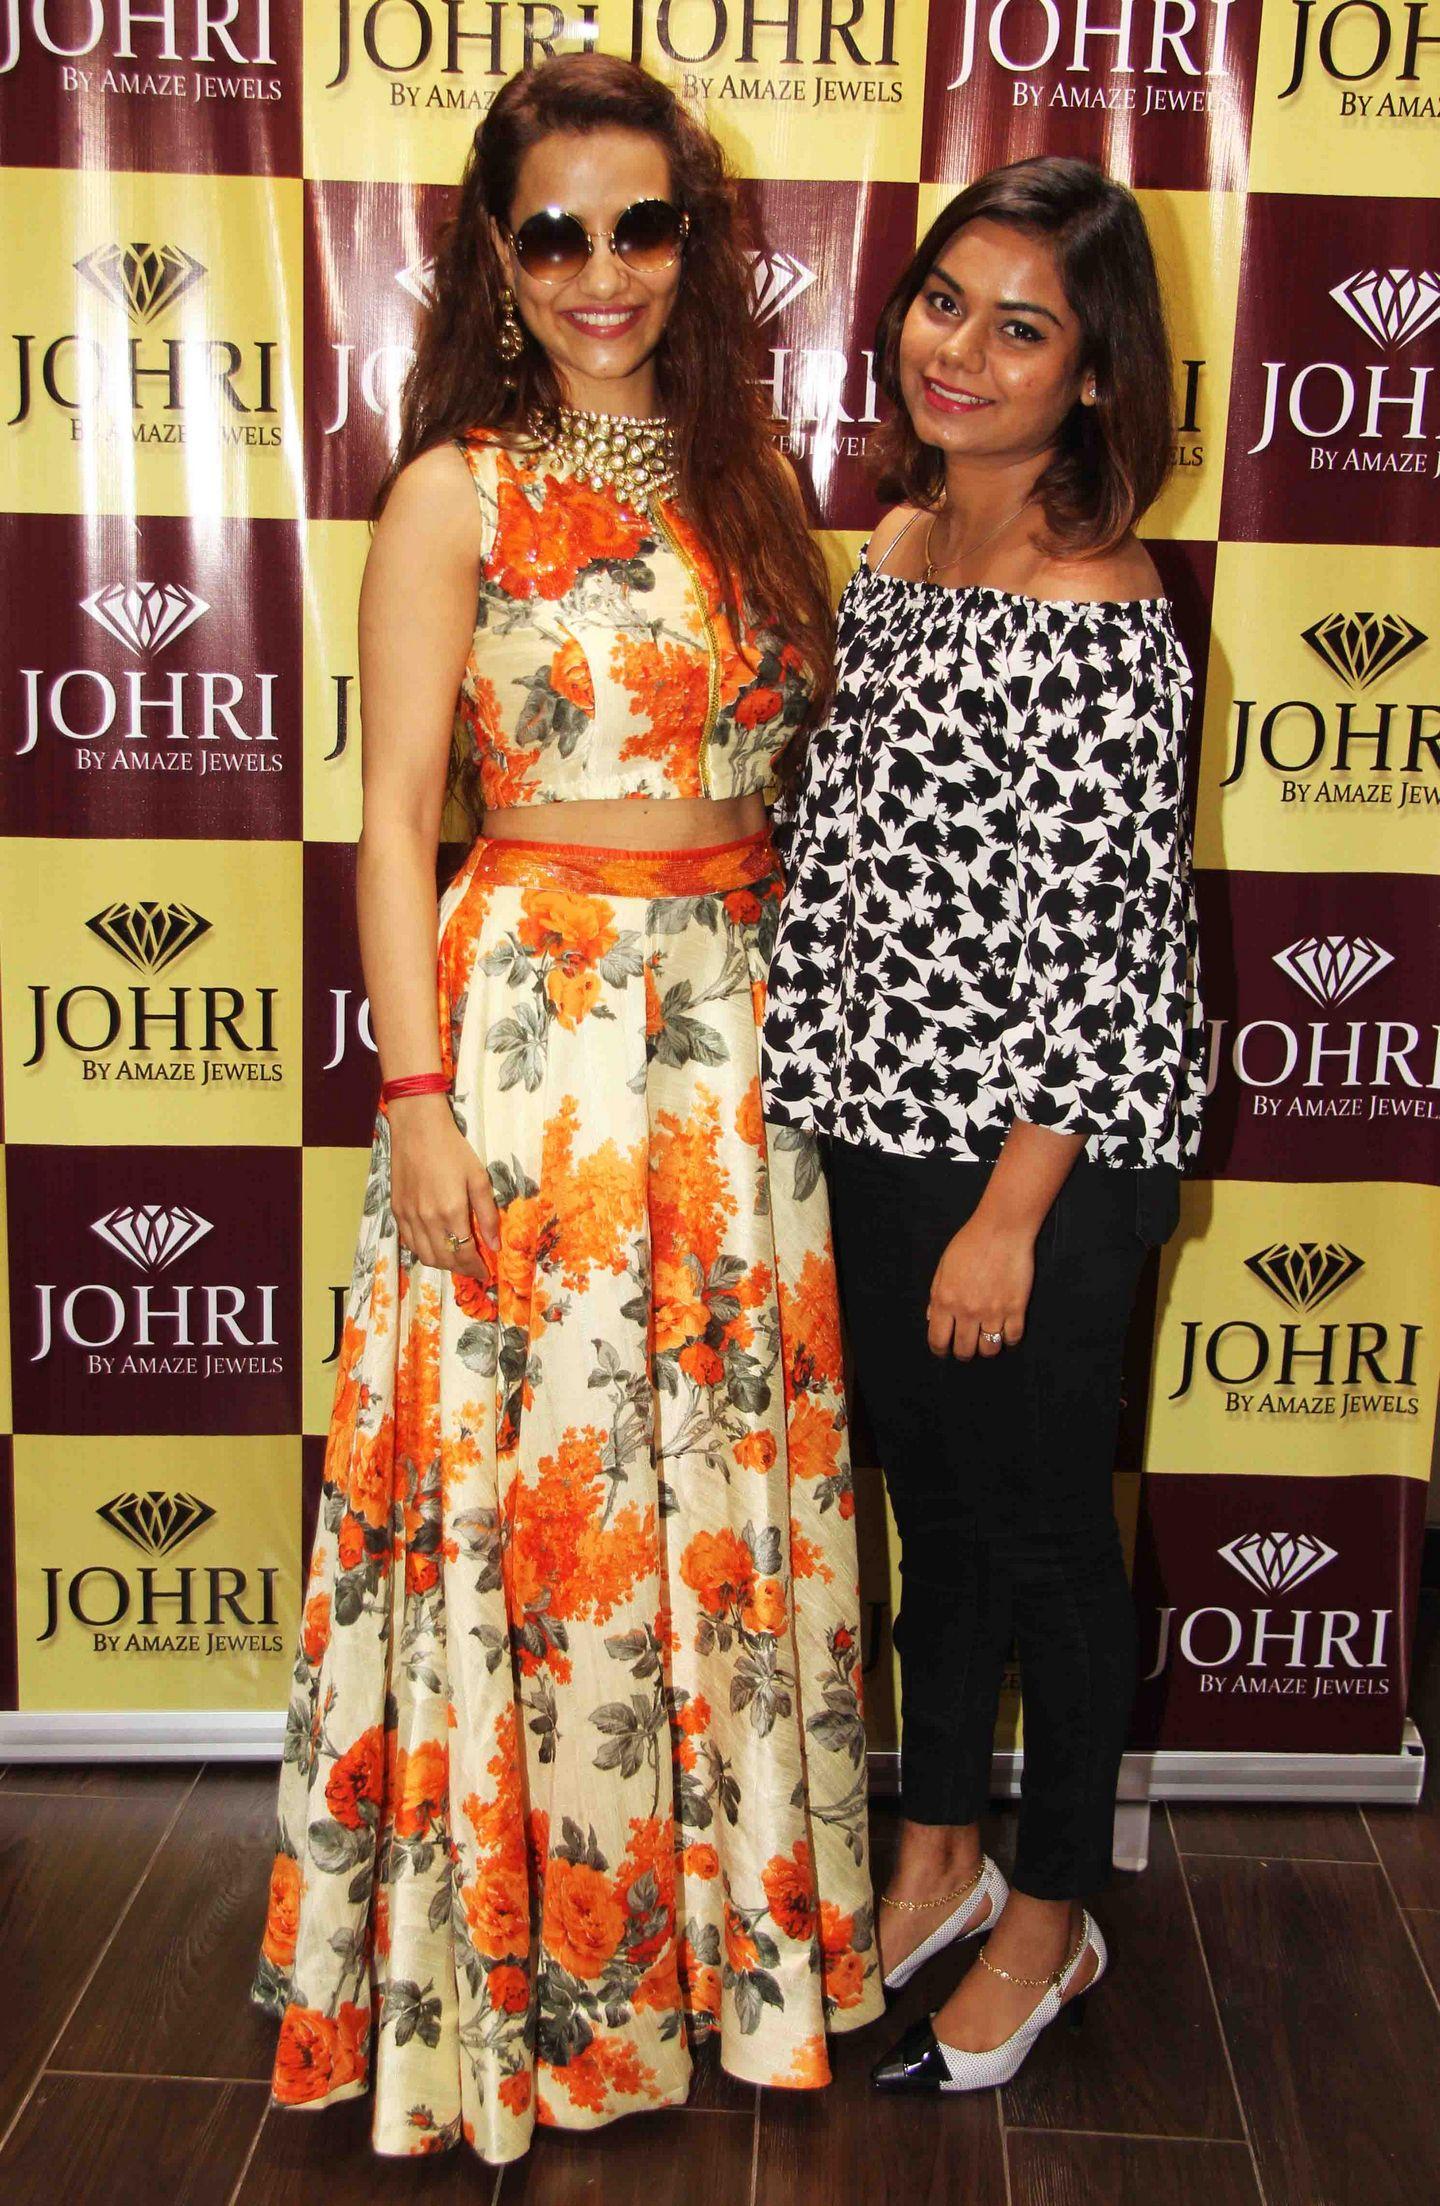 Johari Diamond Jewellery lounge Launch